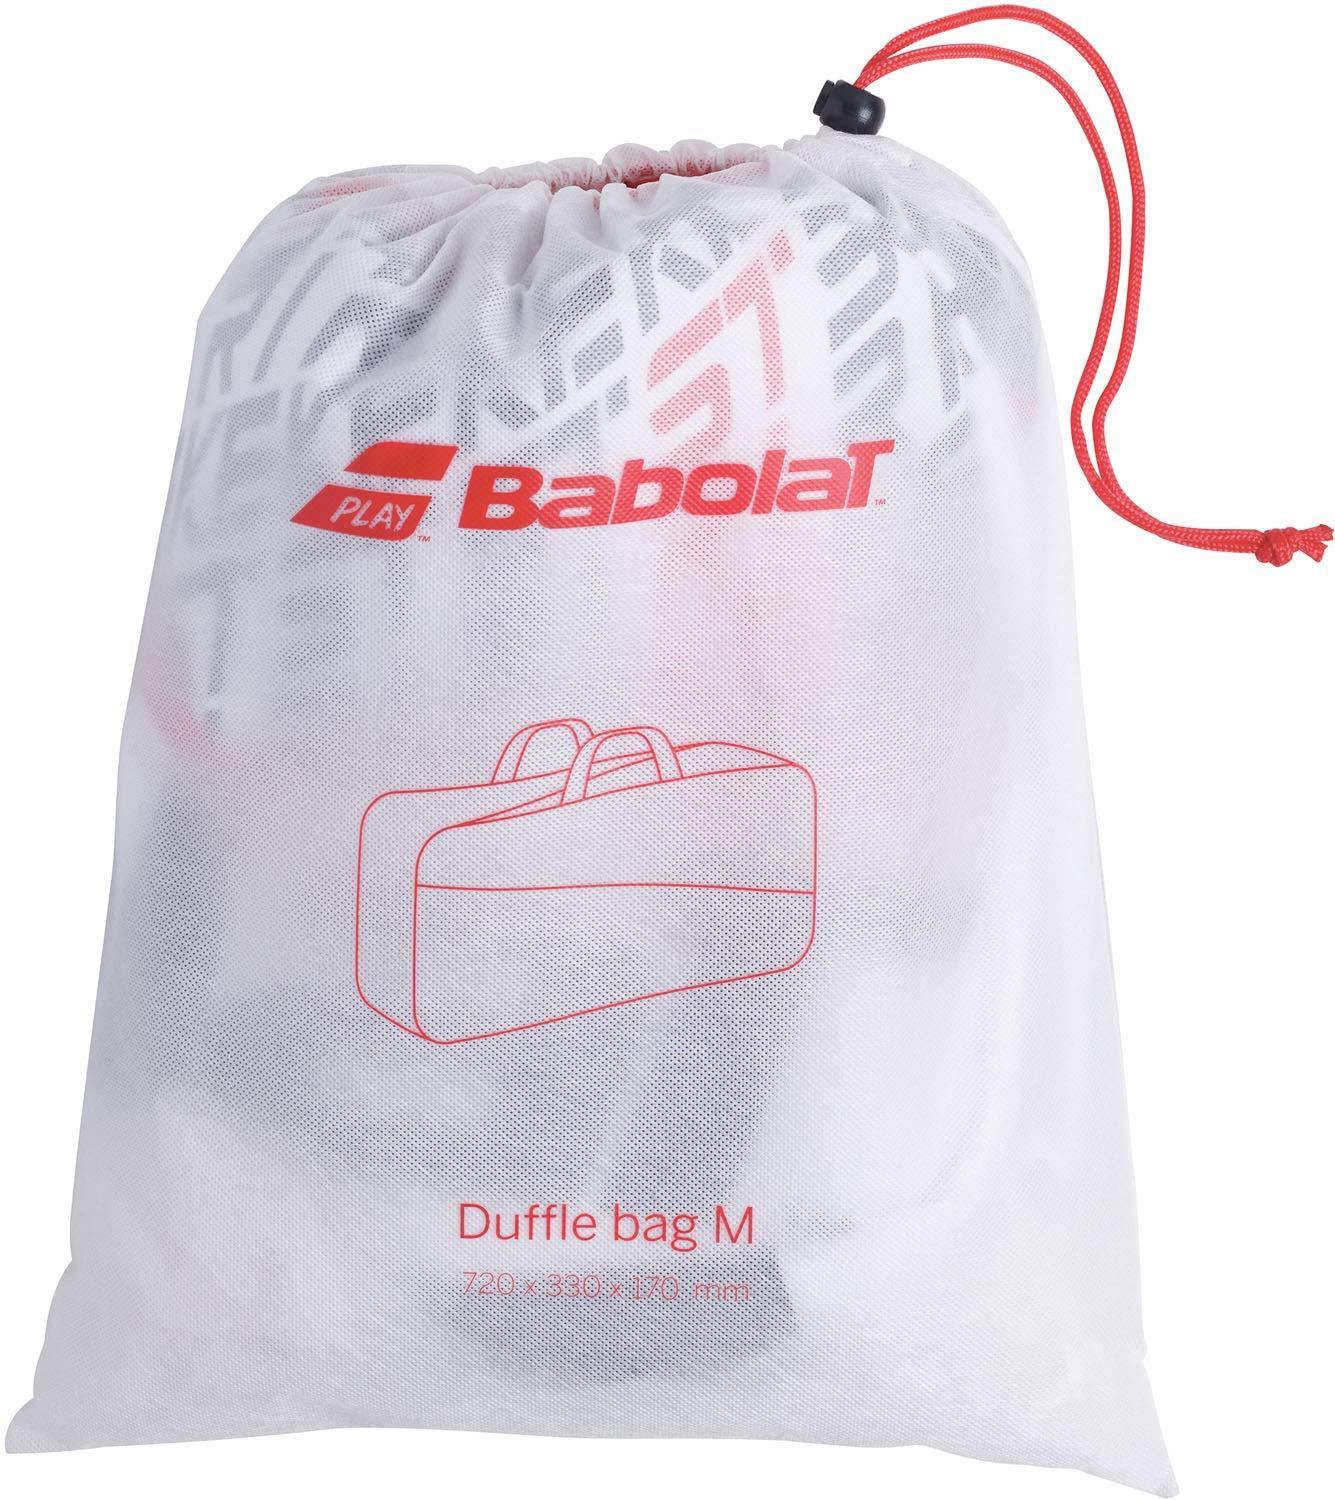 Babolat Duffle M Pure Strike Tennis Bag - White/Red - Best Price online Prokicksports.com